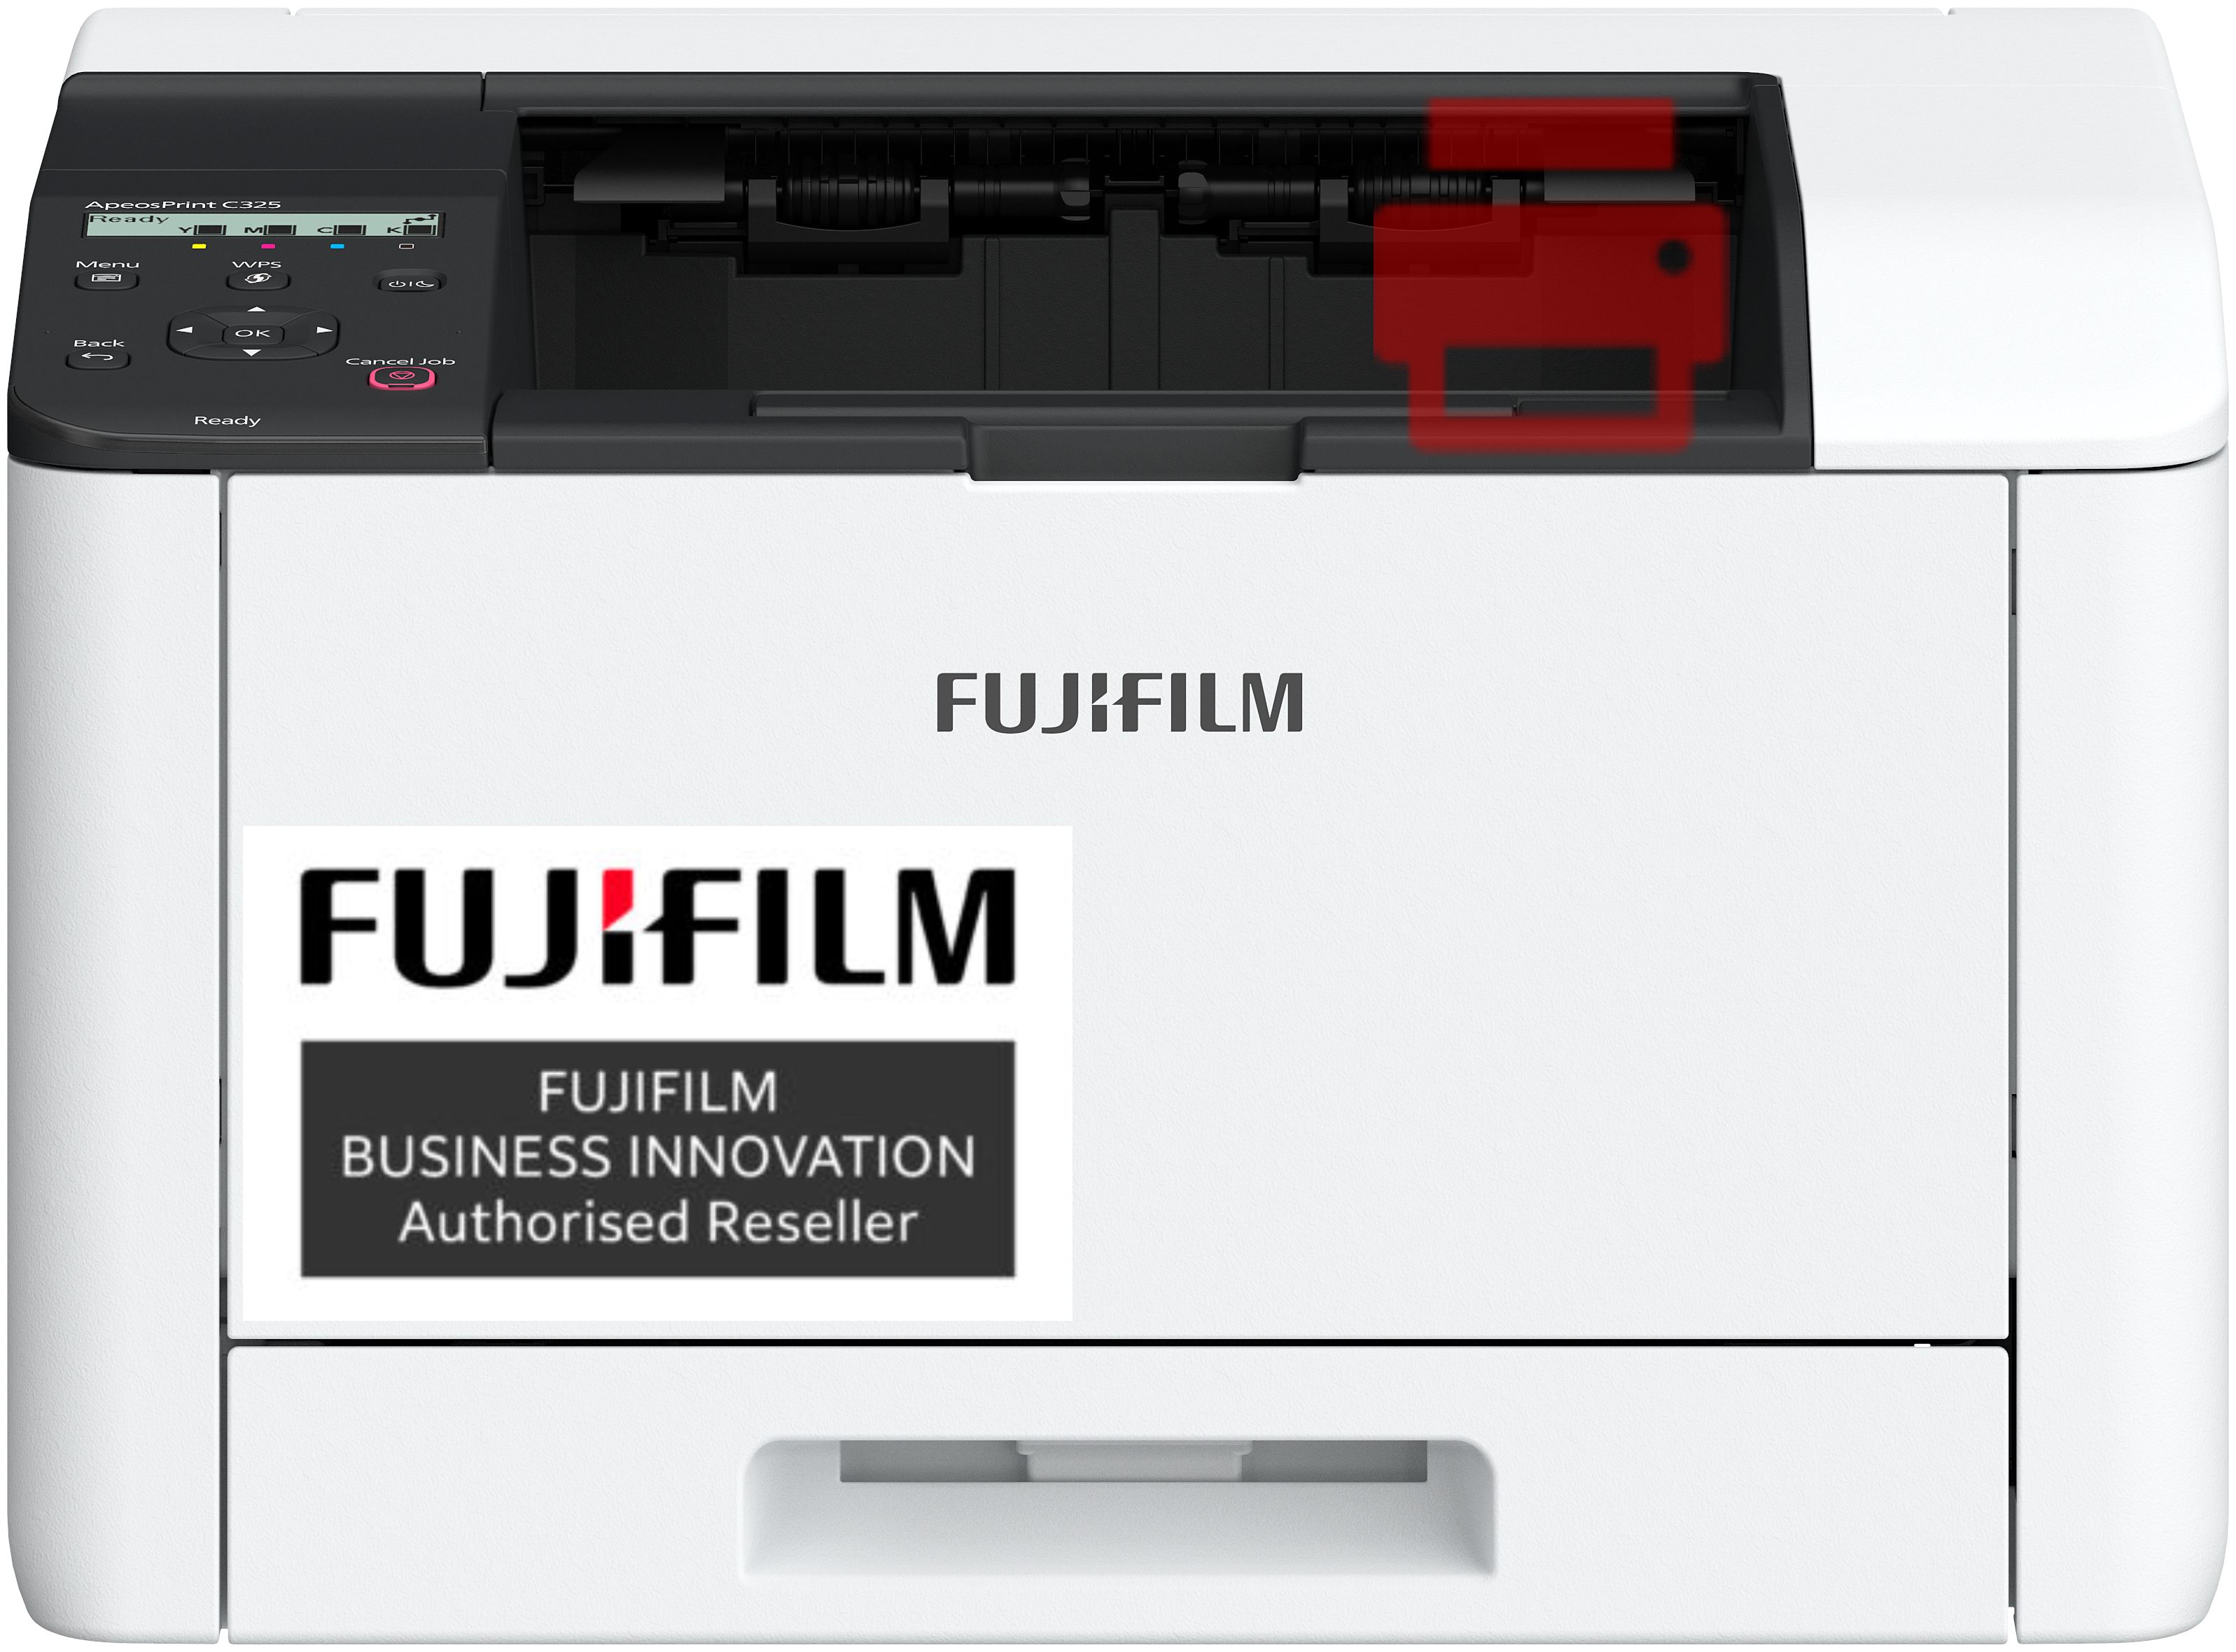 FUJIFILM ApeosPrint C325dw A4 Colour Laser Printer